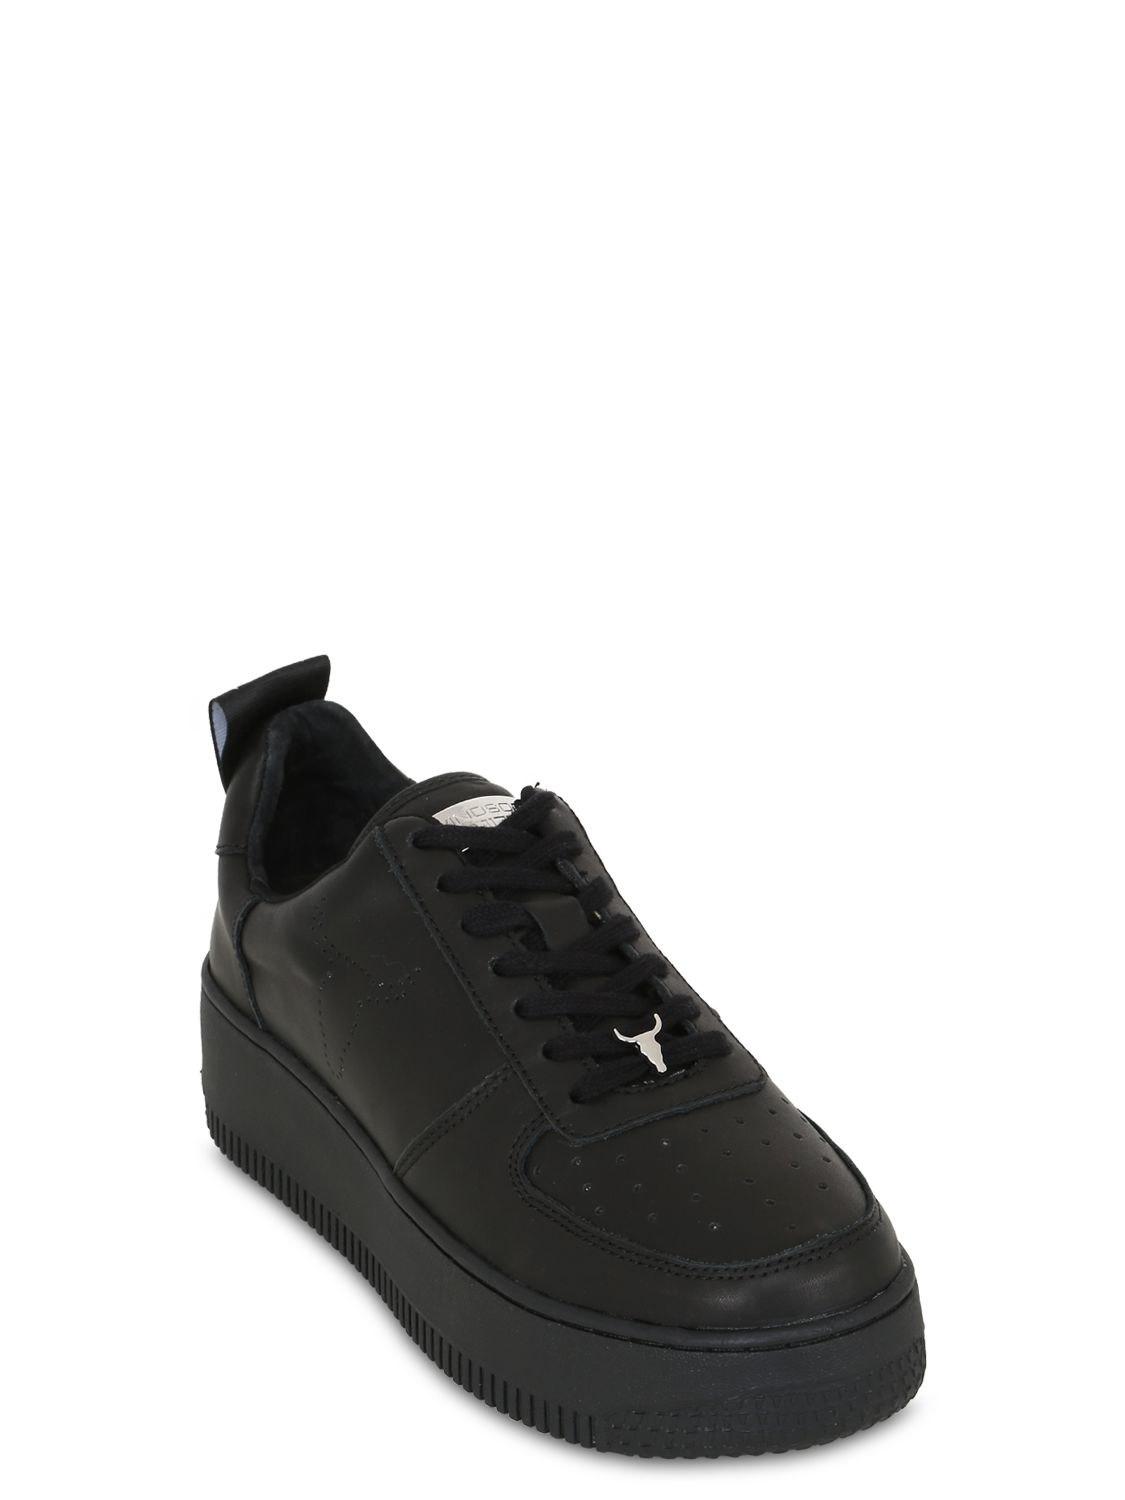 windsor smith black shoes